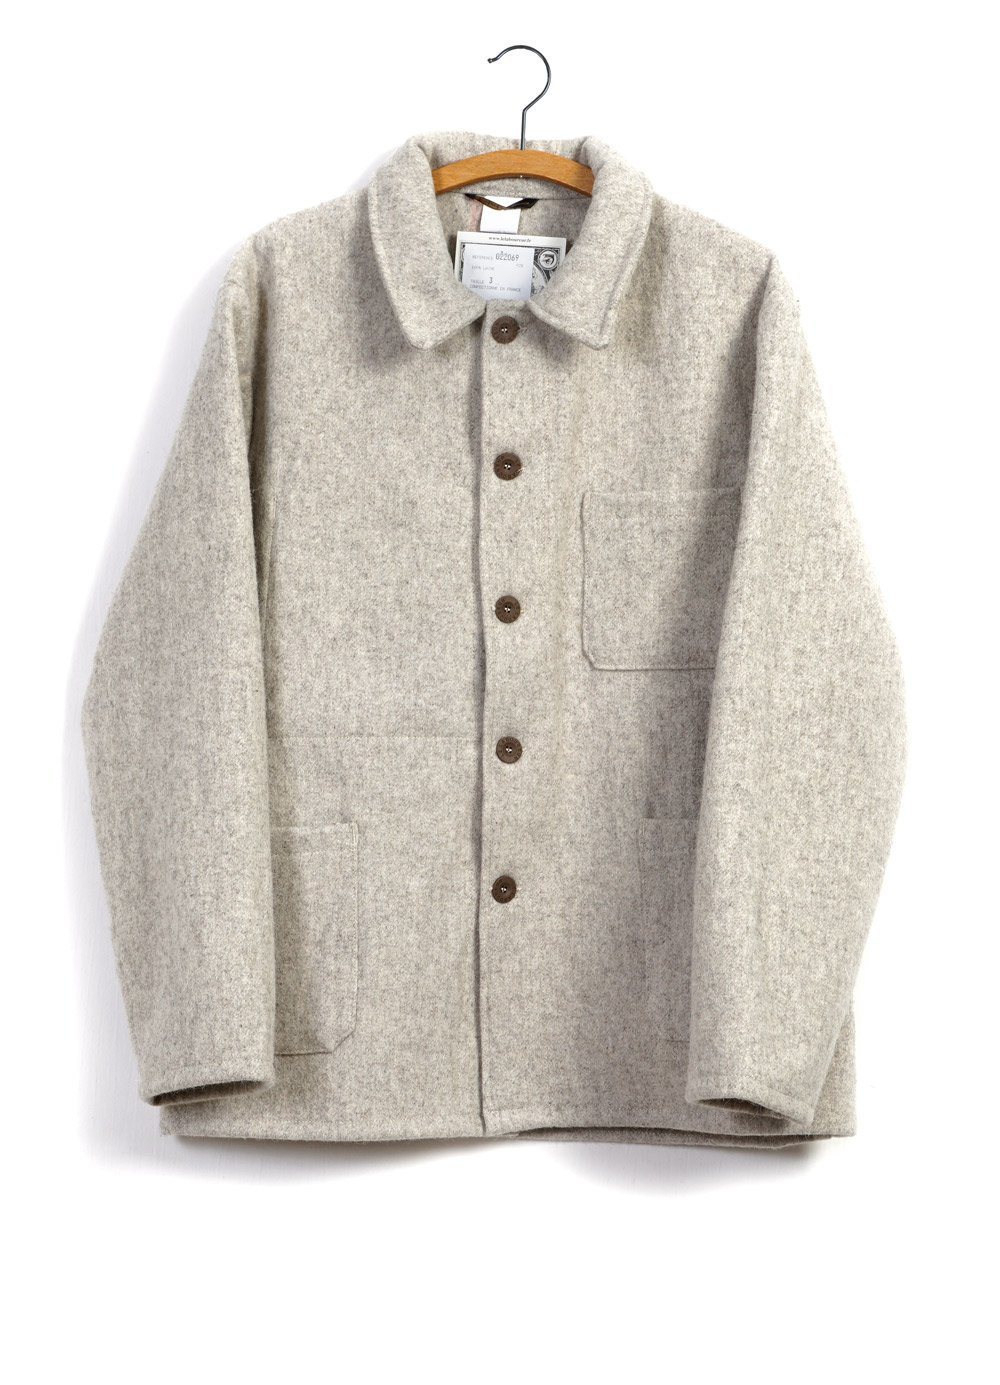 WORK JACKET | Wool | Nature | €225 -LE LABOUREUR- HANSEN Garments